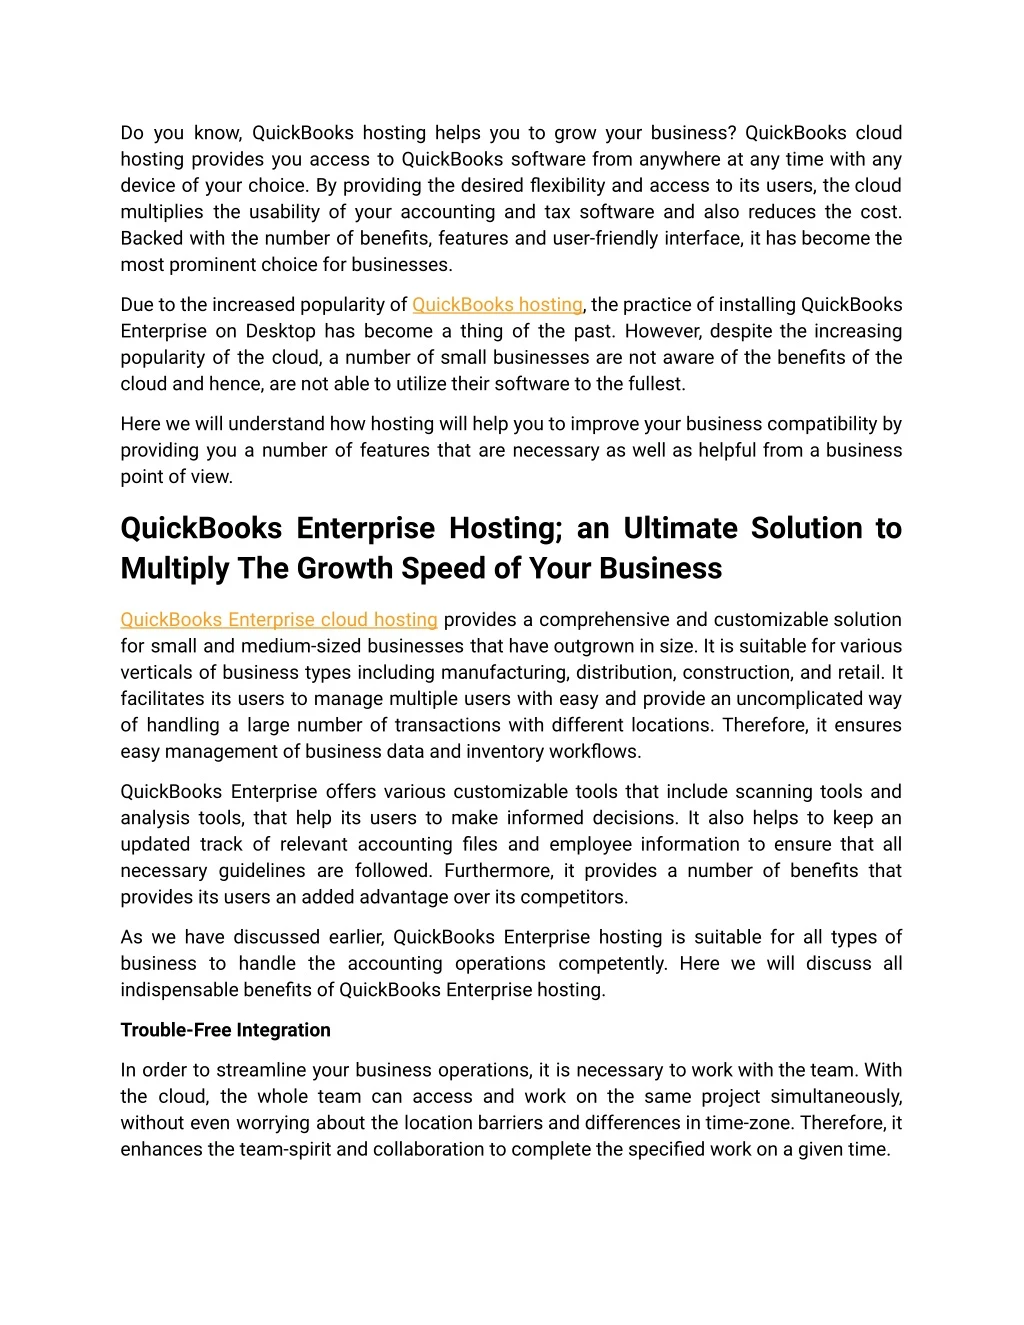 do you know quickbooks hosting helps you to grow